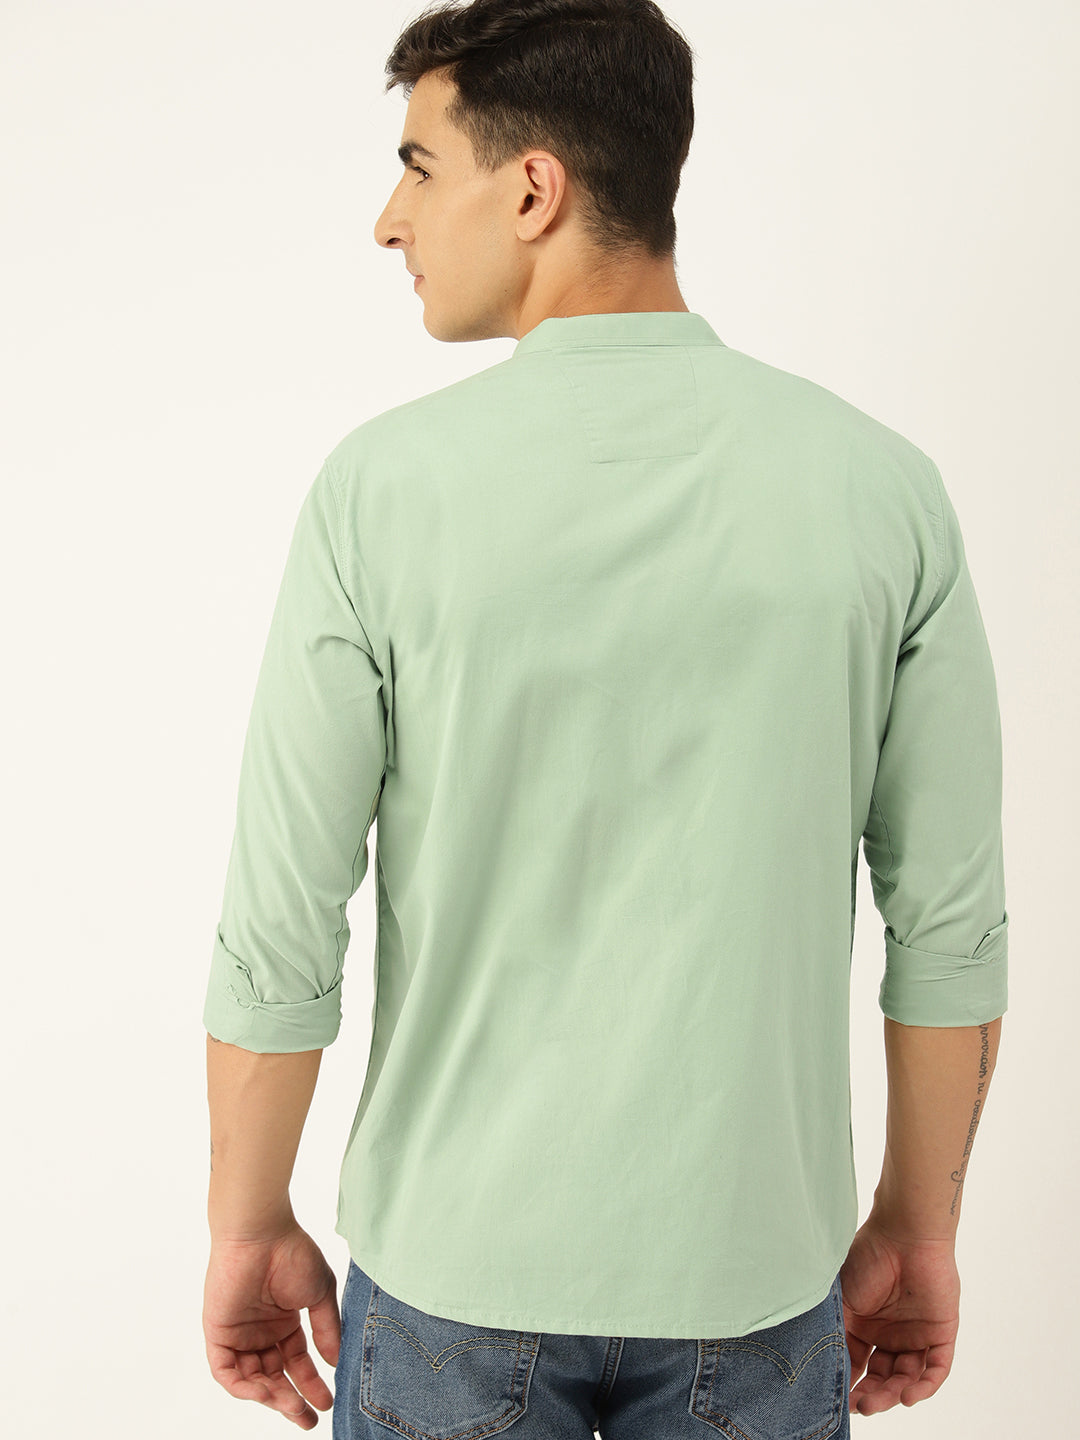 Luxrio Men's Solid Slim Fit Mandarin Collared Casual Shirt Green